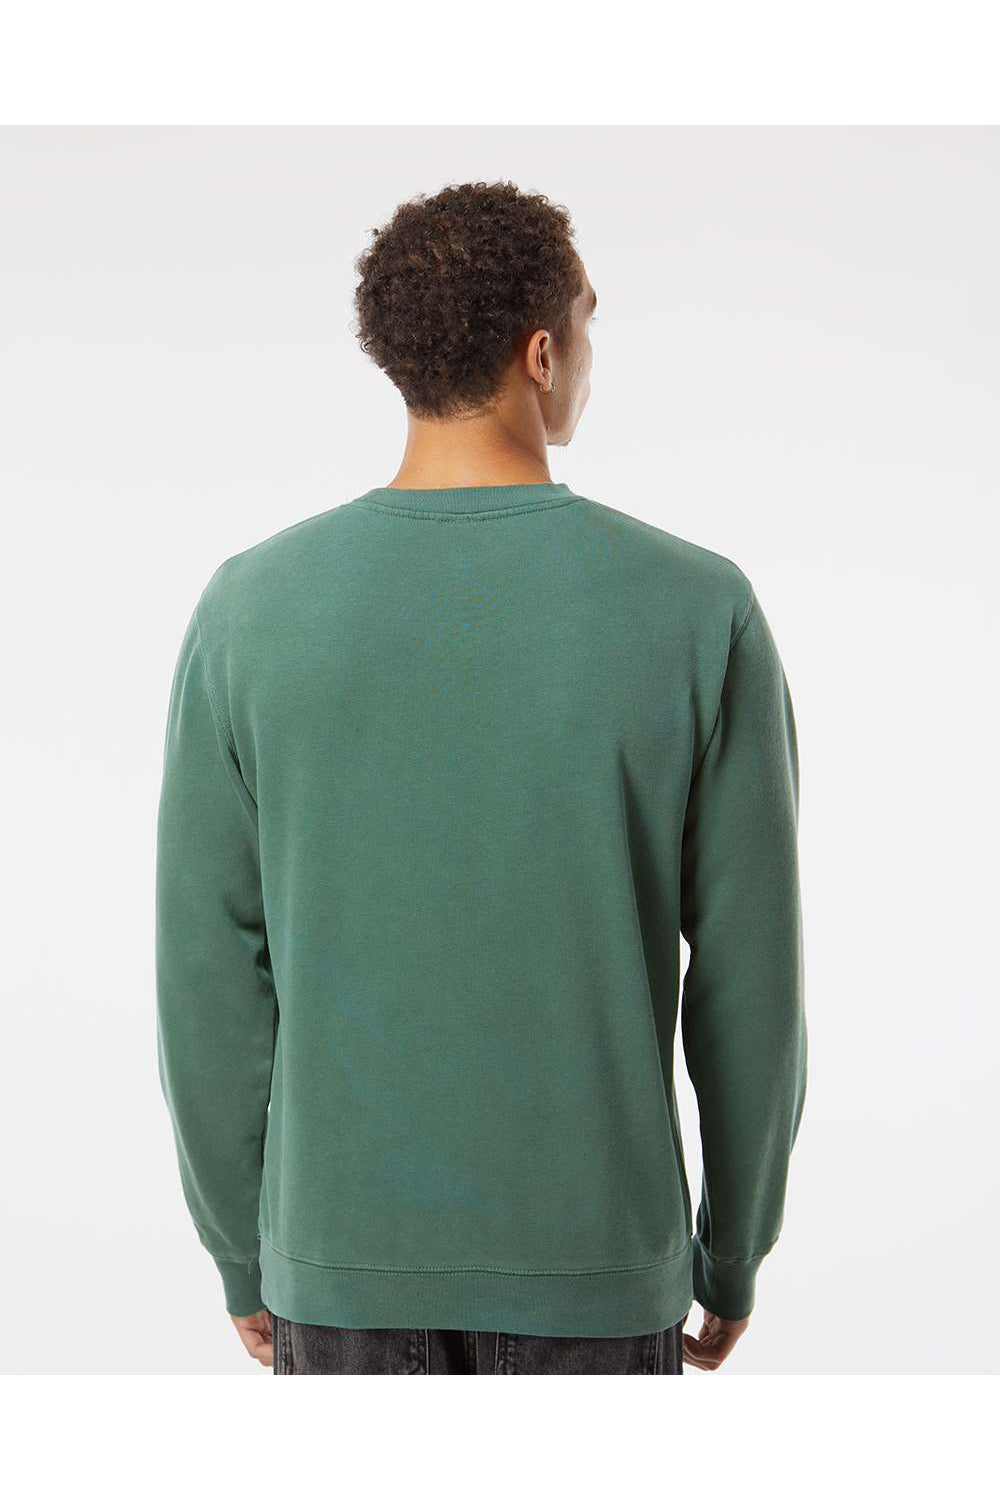 Independent Trading Co. PRM3500 Mens Pigment Dyed Crewneck Sweatshirt Alpine Green Model Back